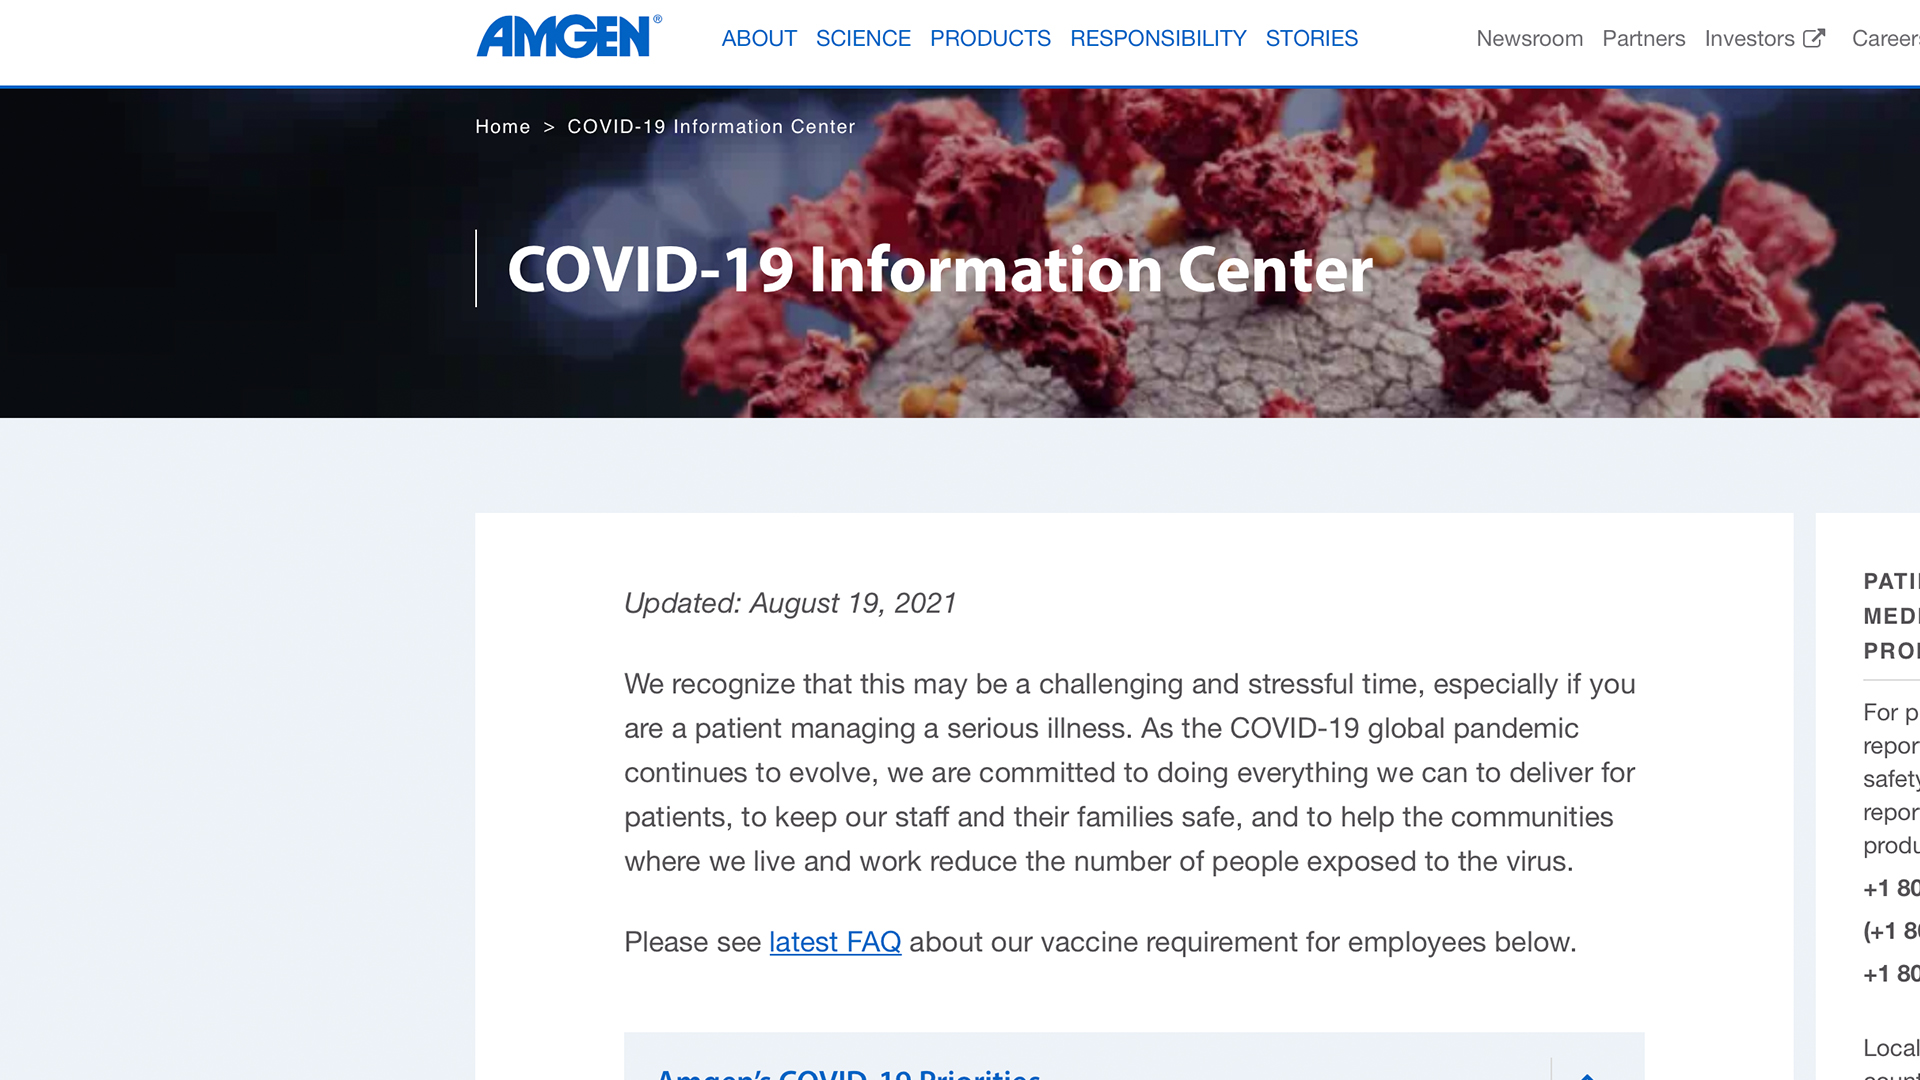 Amgen’s COVID-19 Information Center